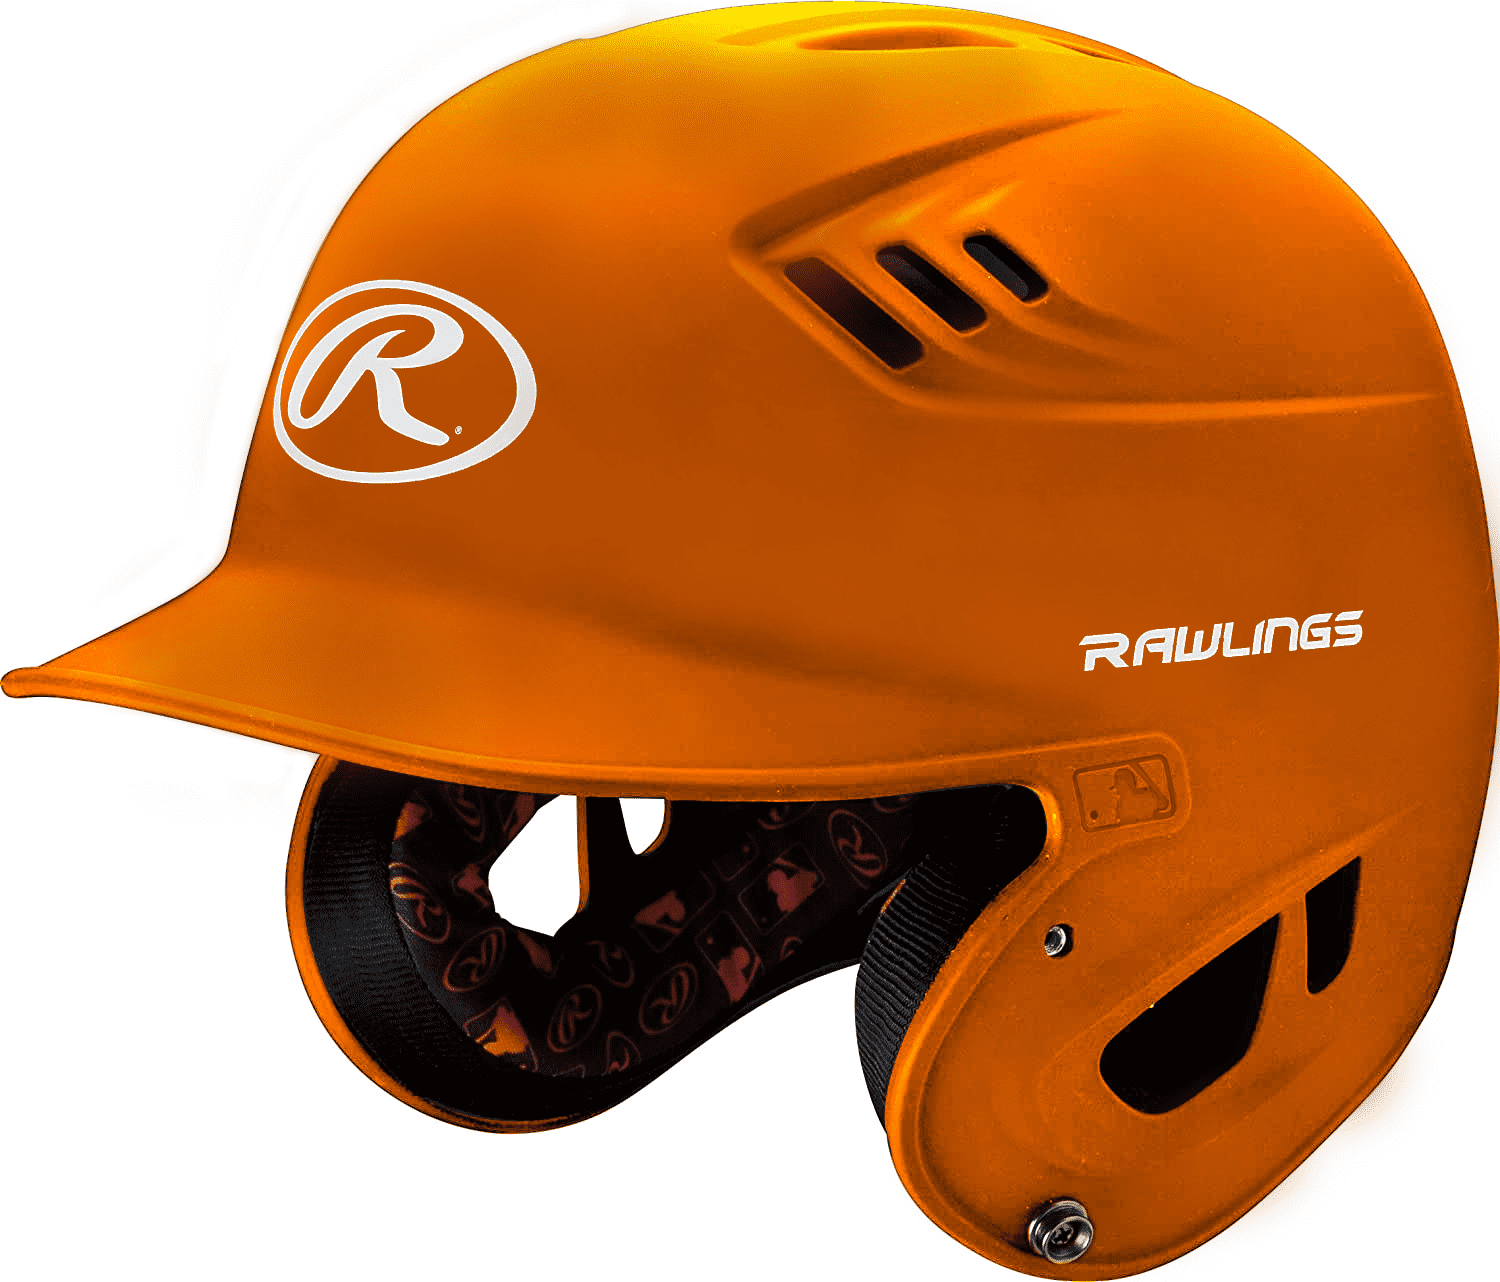 New Rawlings Coolflo Helmets Baseball Batting Softball U Pick Colors 